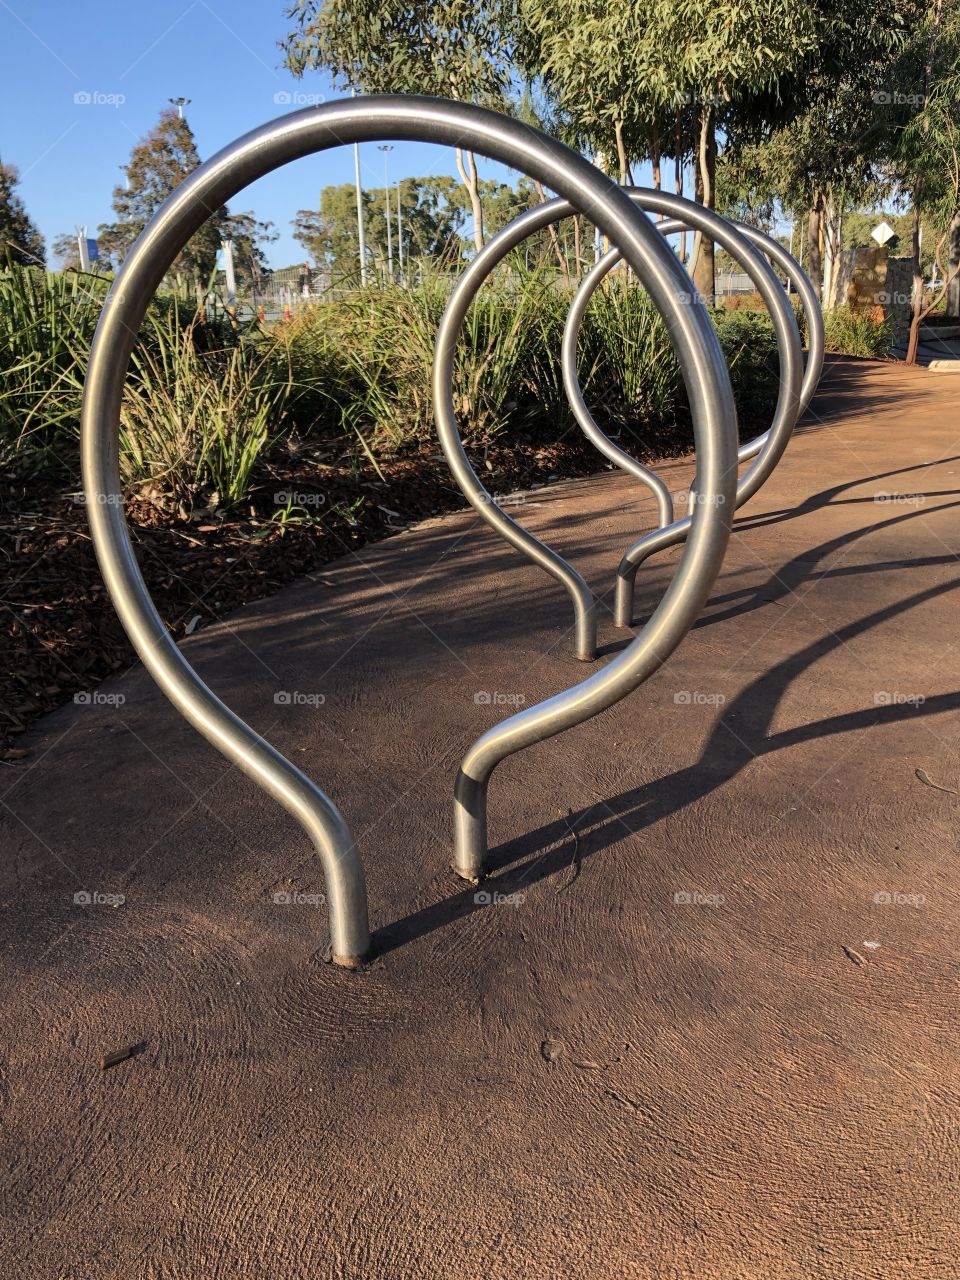 Metal fixtures for bicycles’ parking 